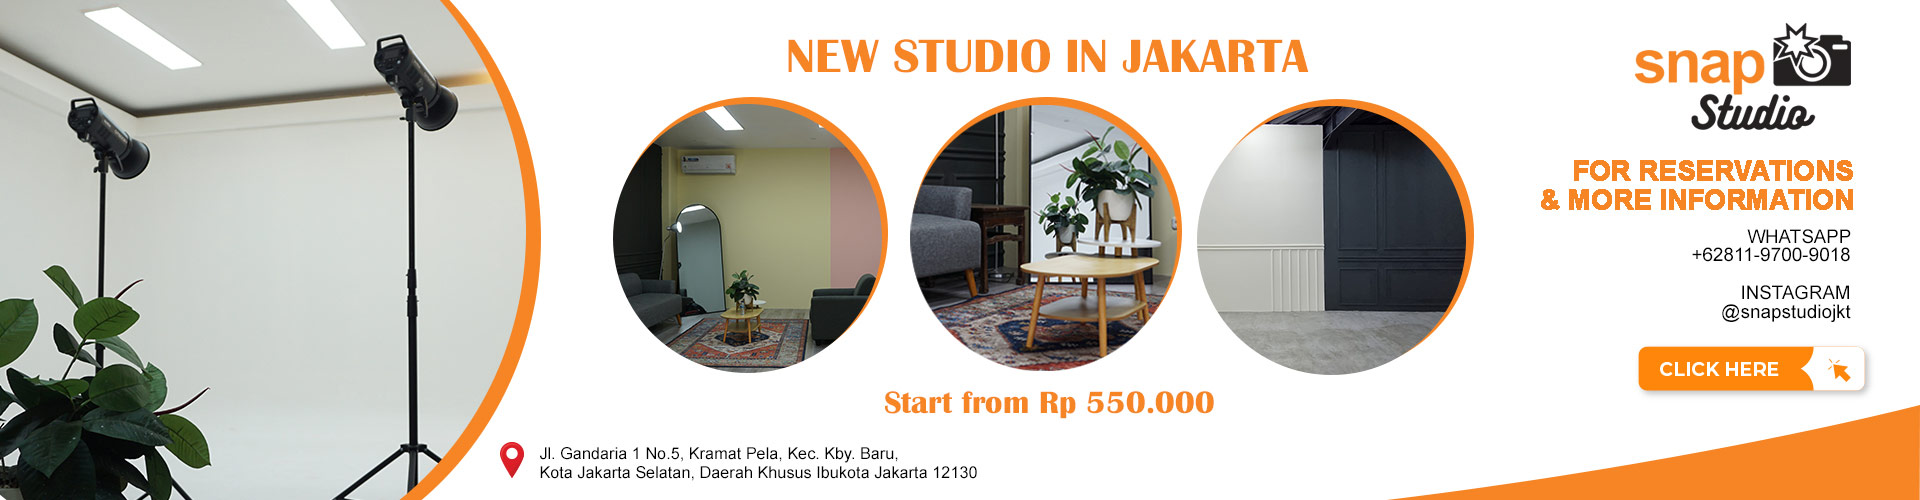 Snap Studio Terbaru di Jakarta